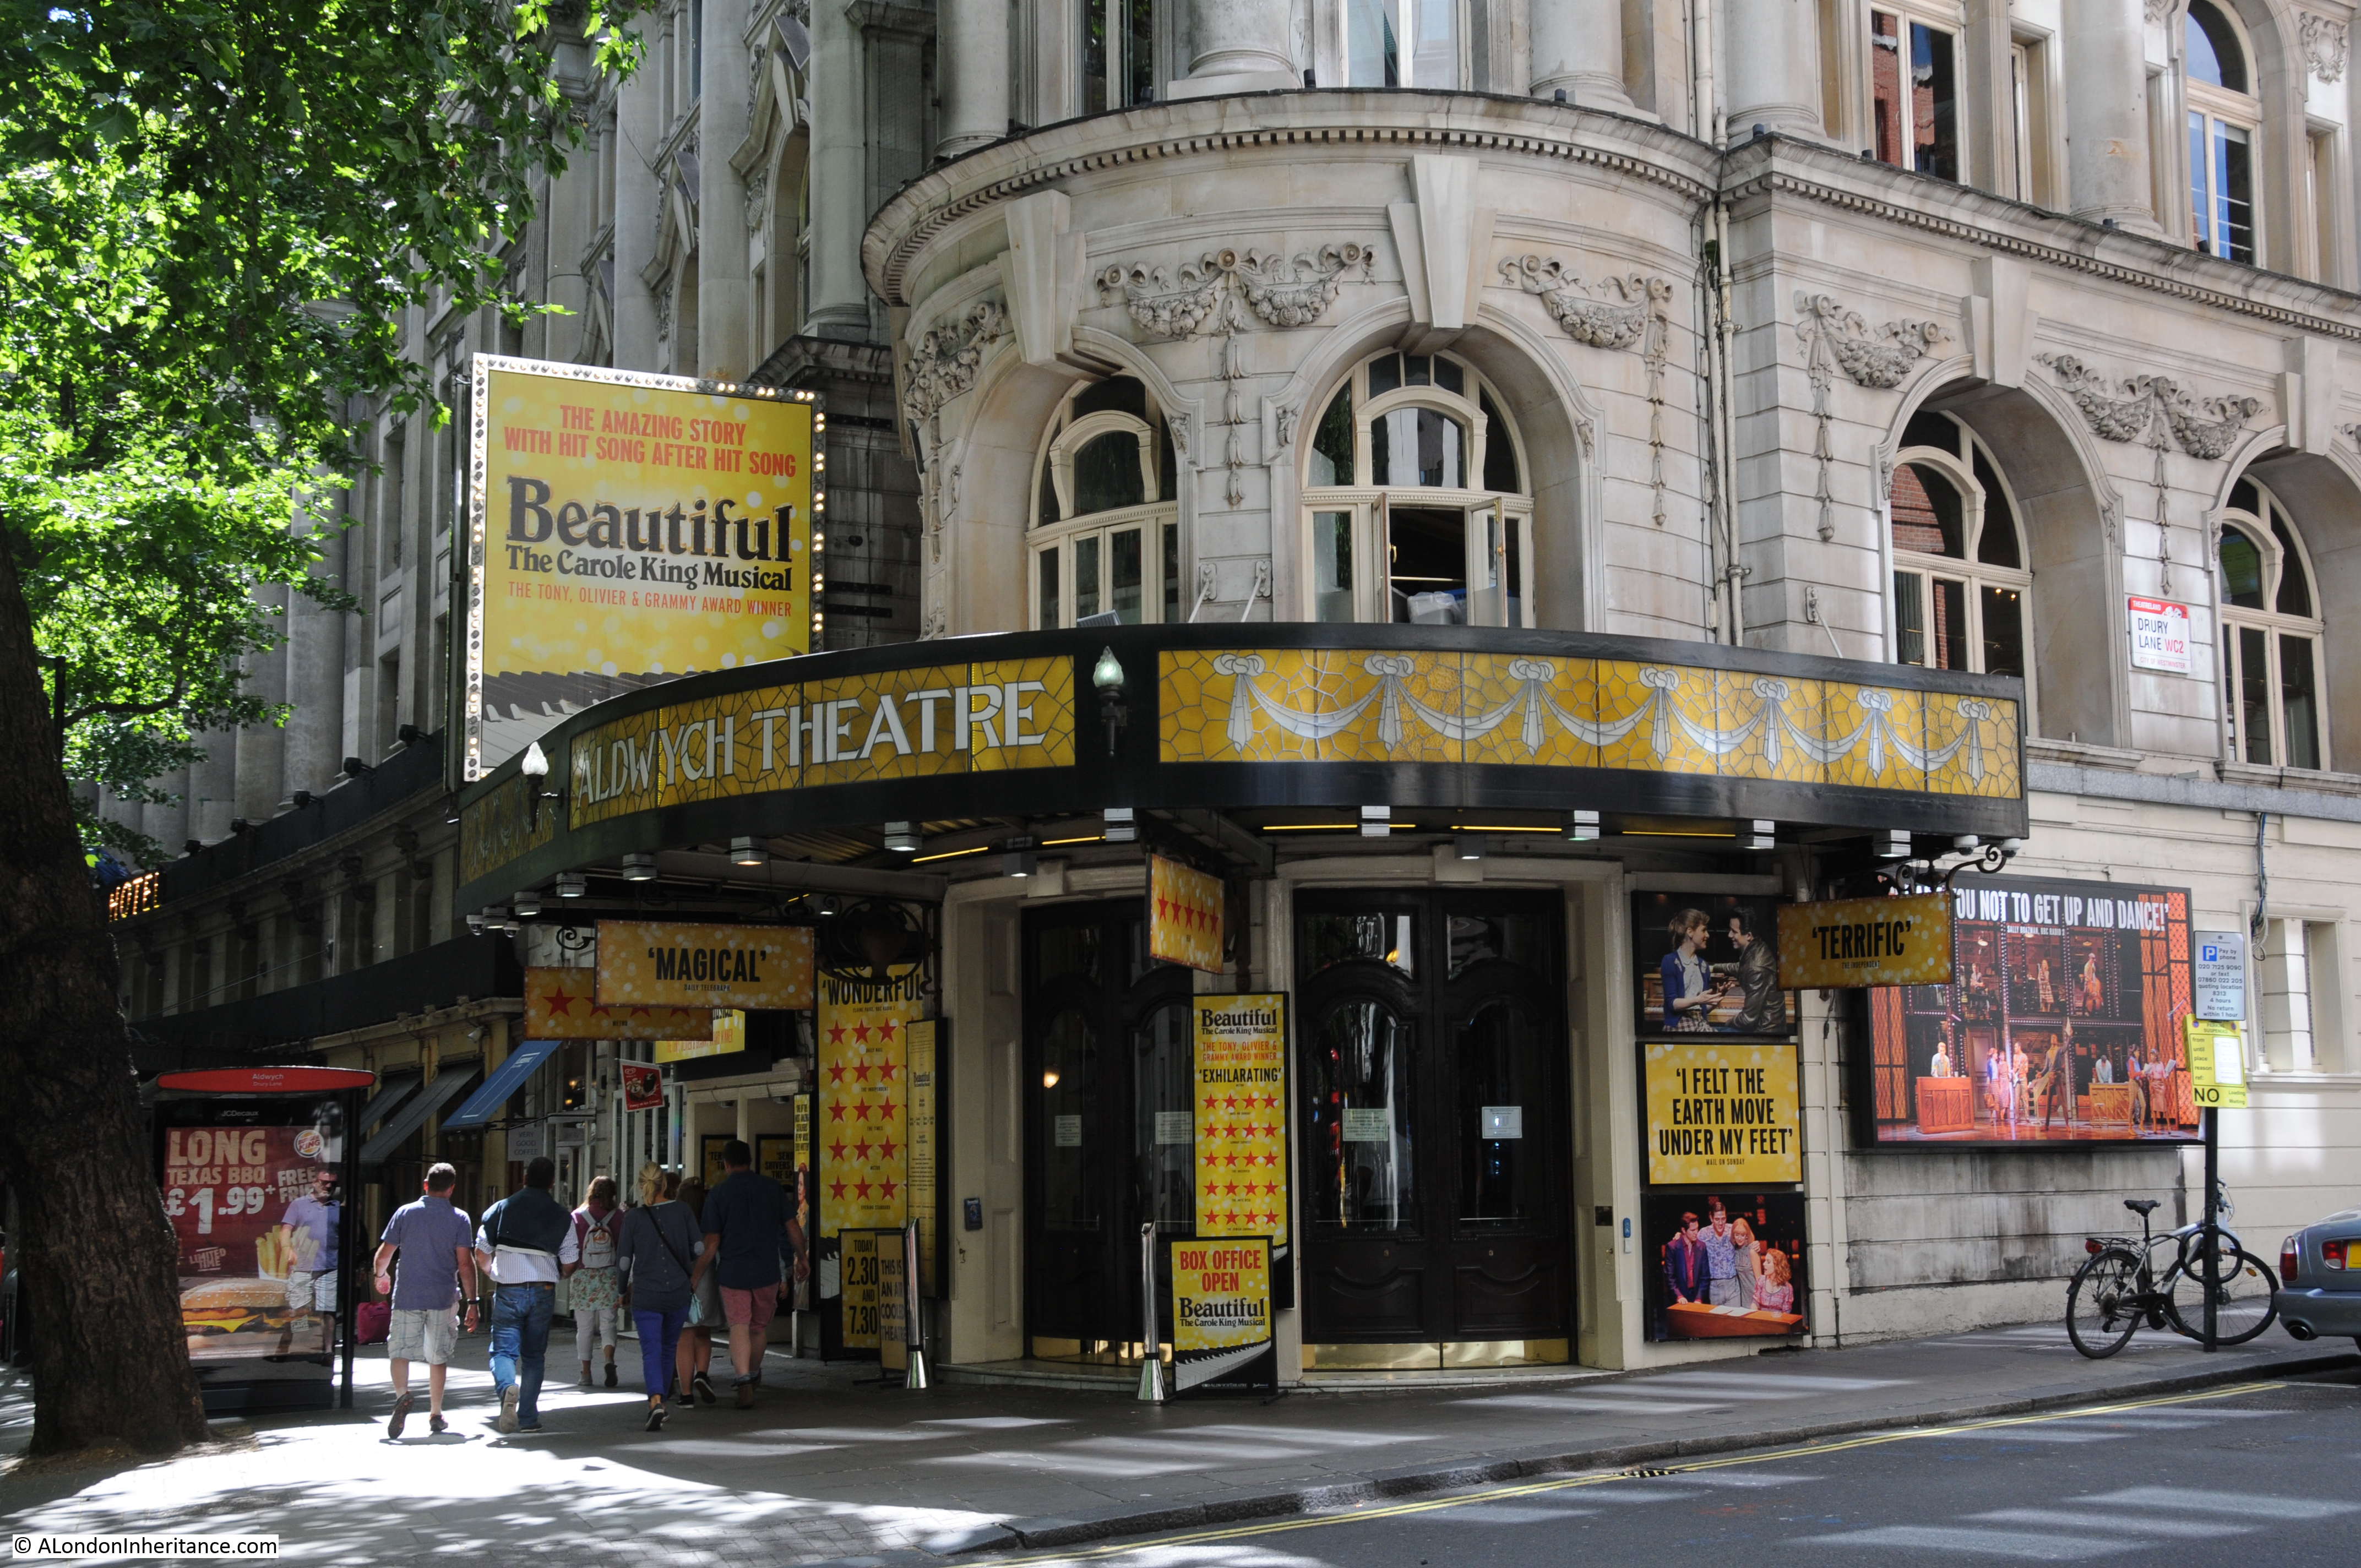 West End Theatres - Donmar to Palladium - A London Inheritance